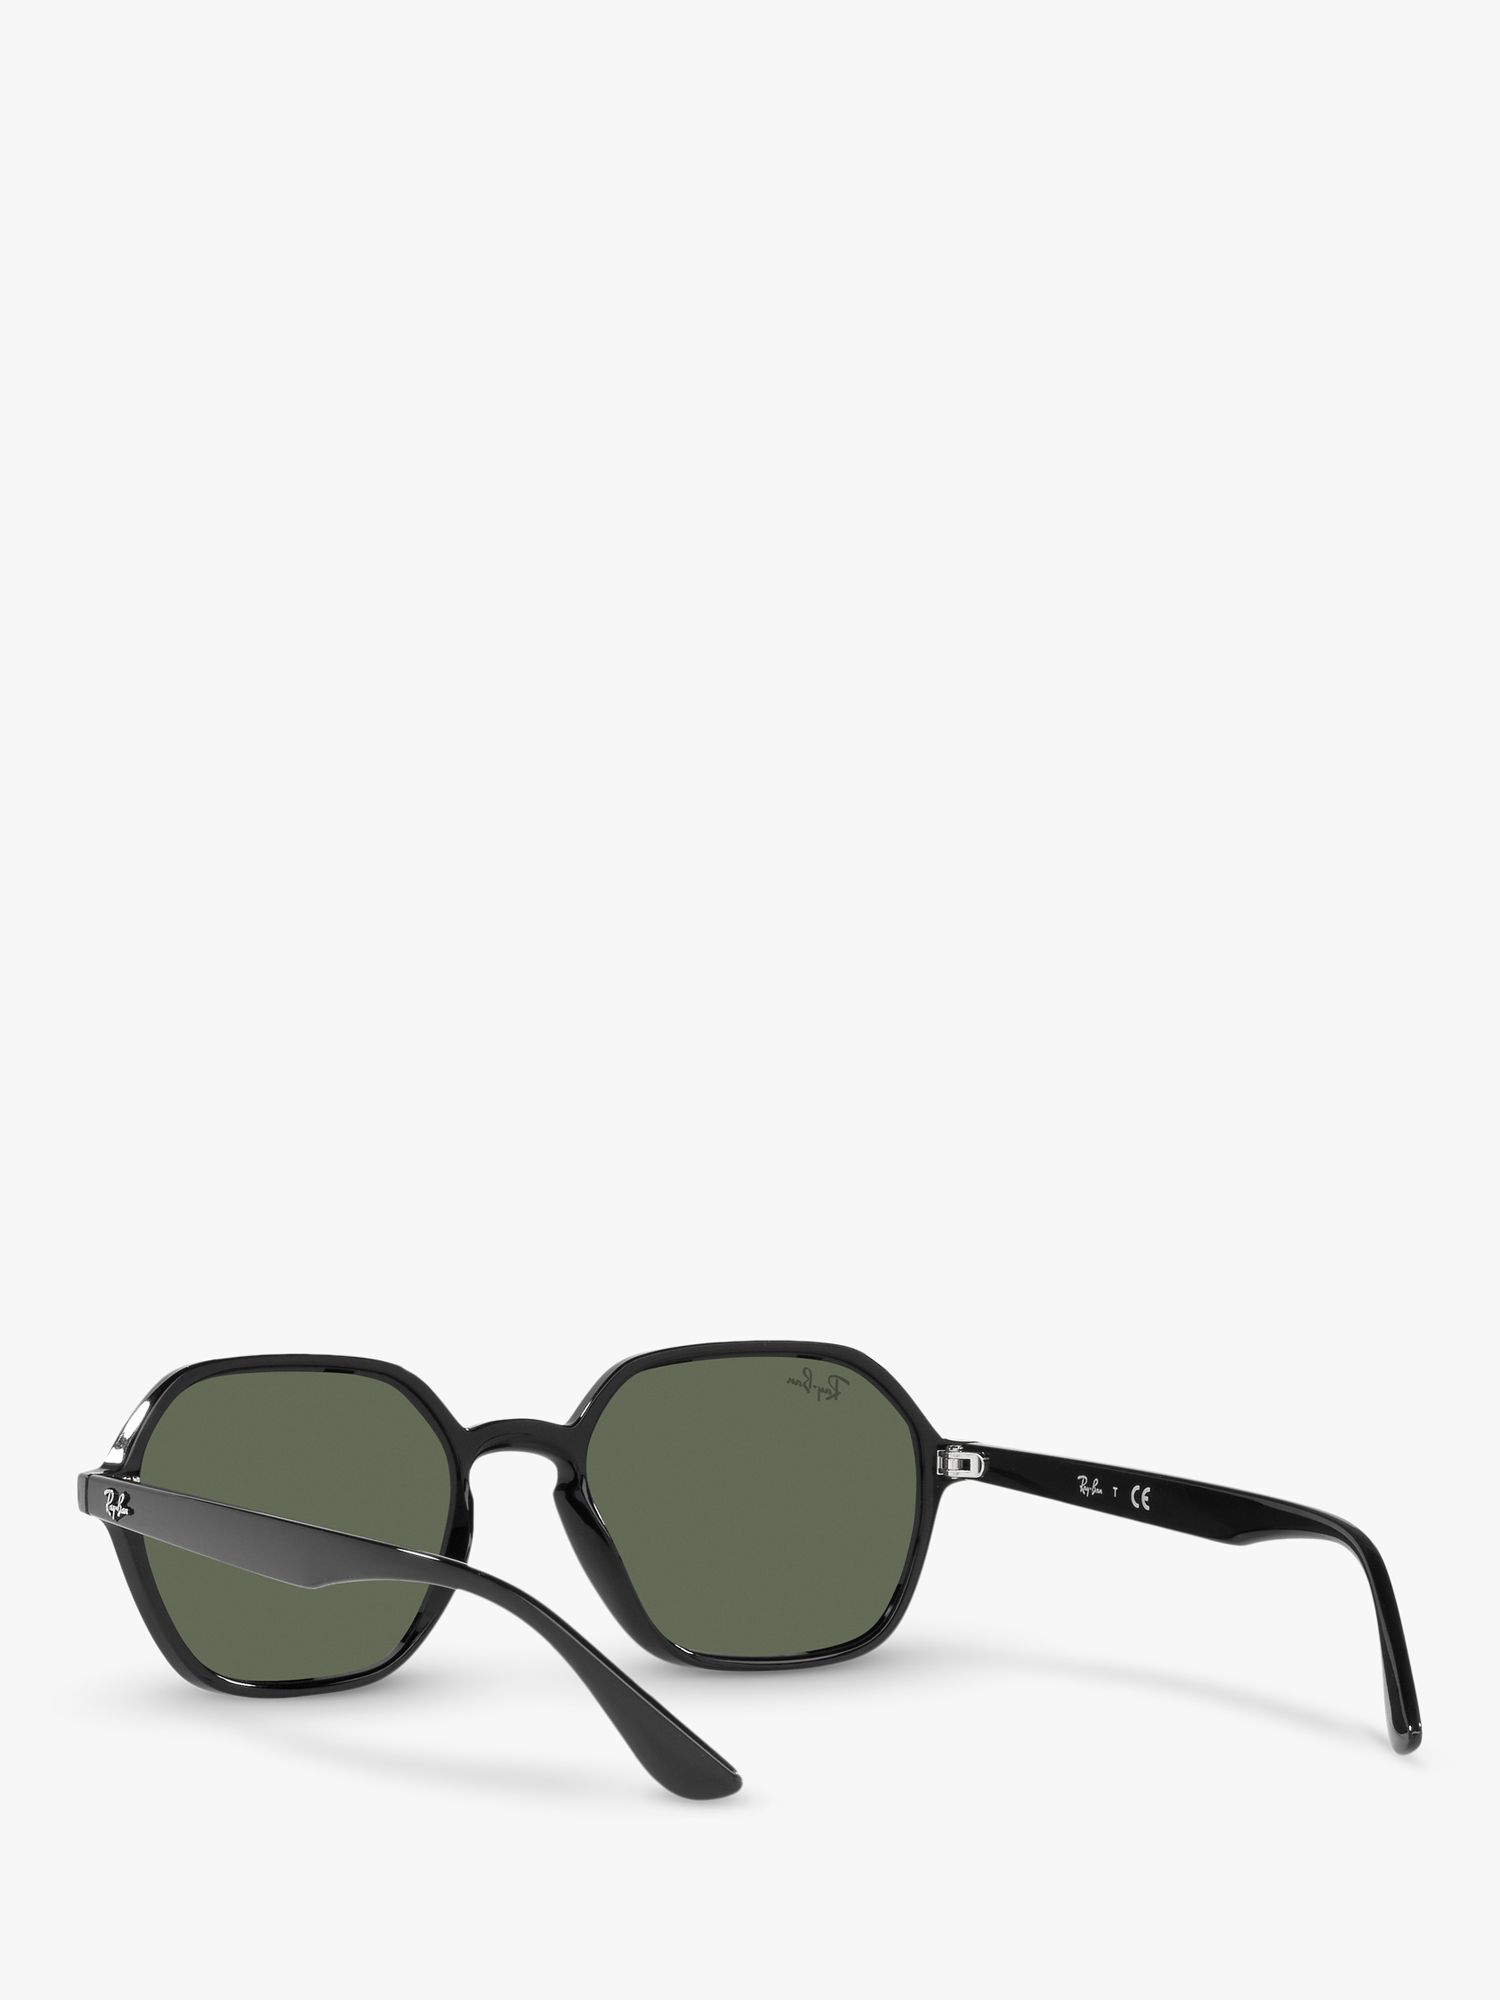 Buy Ray-Ban RB4361 Unisex Irregular Sunglasses, Shiny Black/Green Online at johnlewis.com